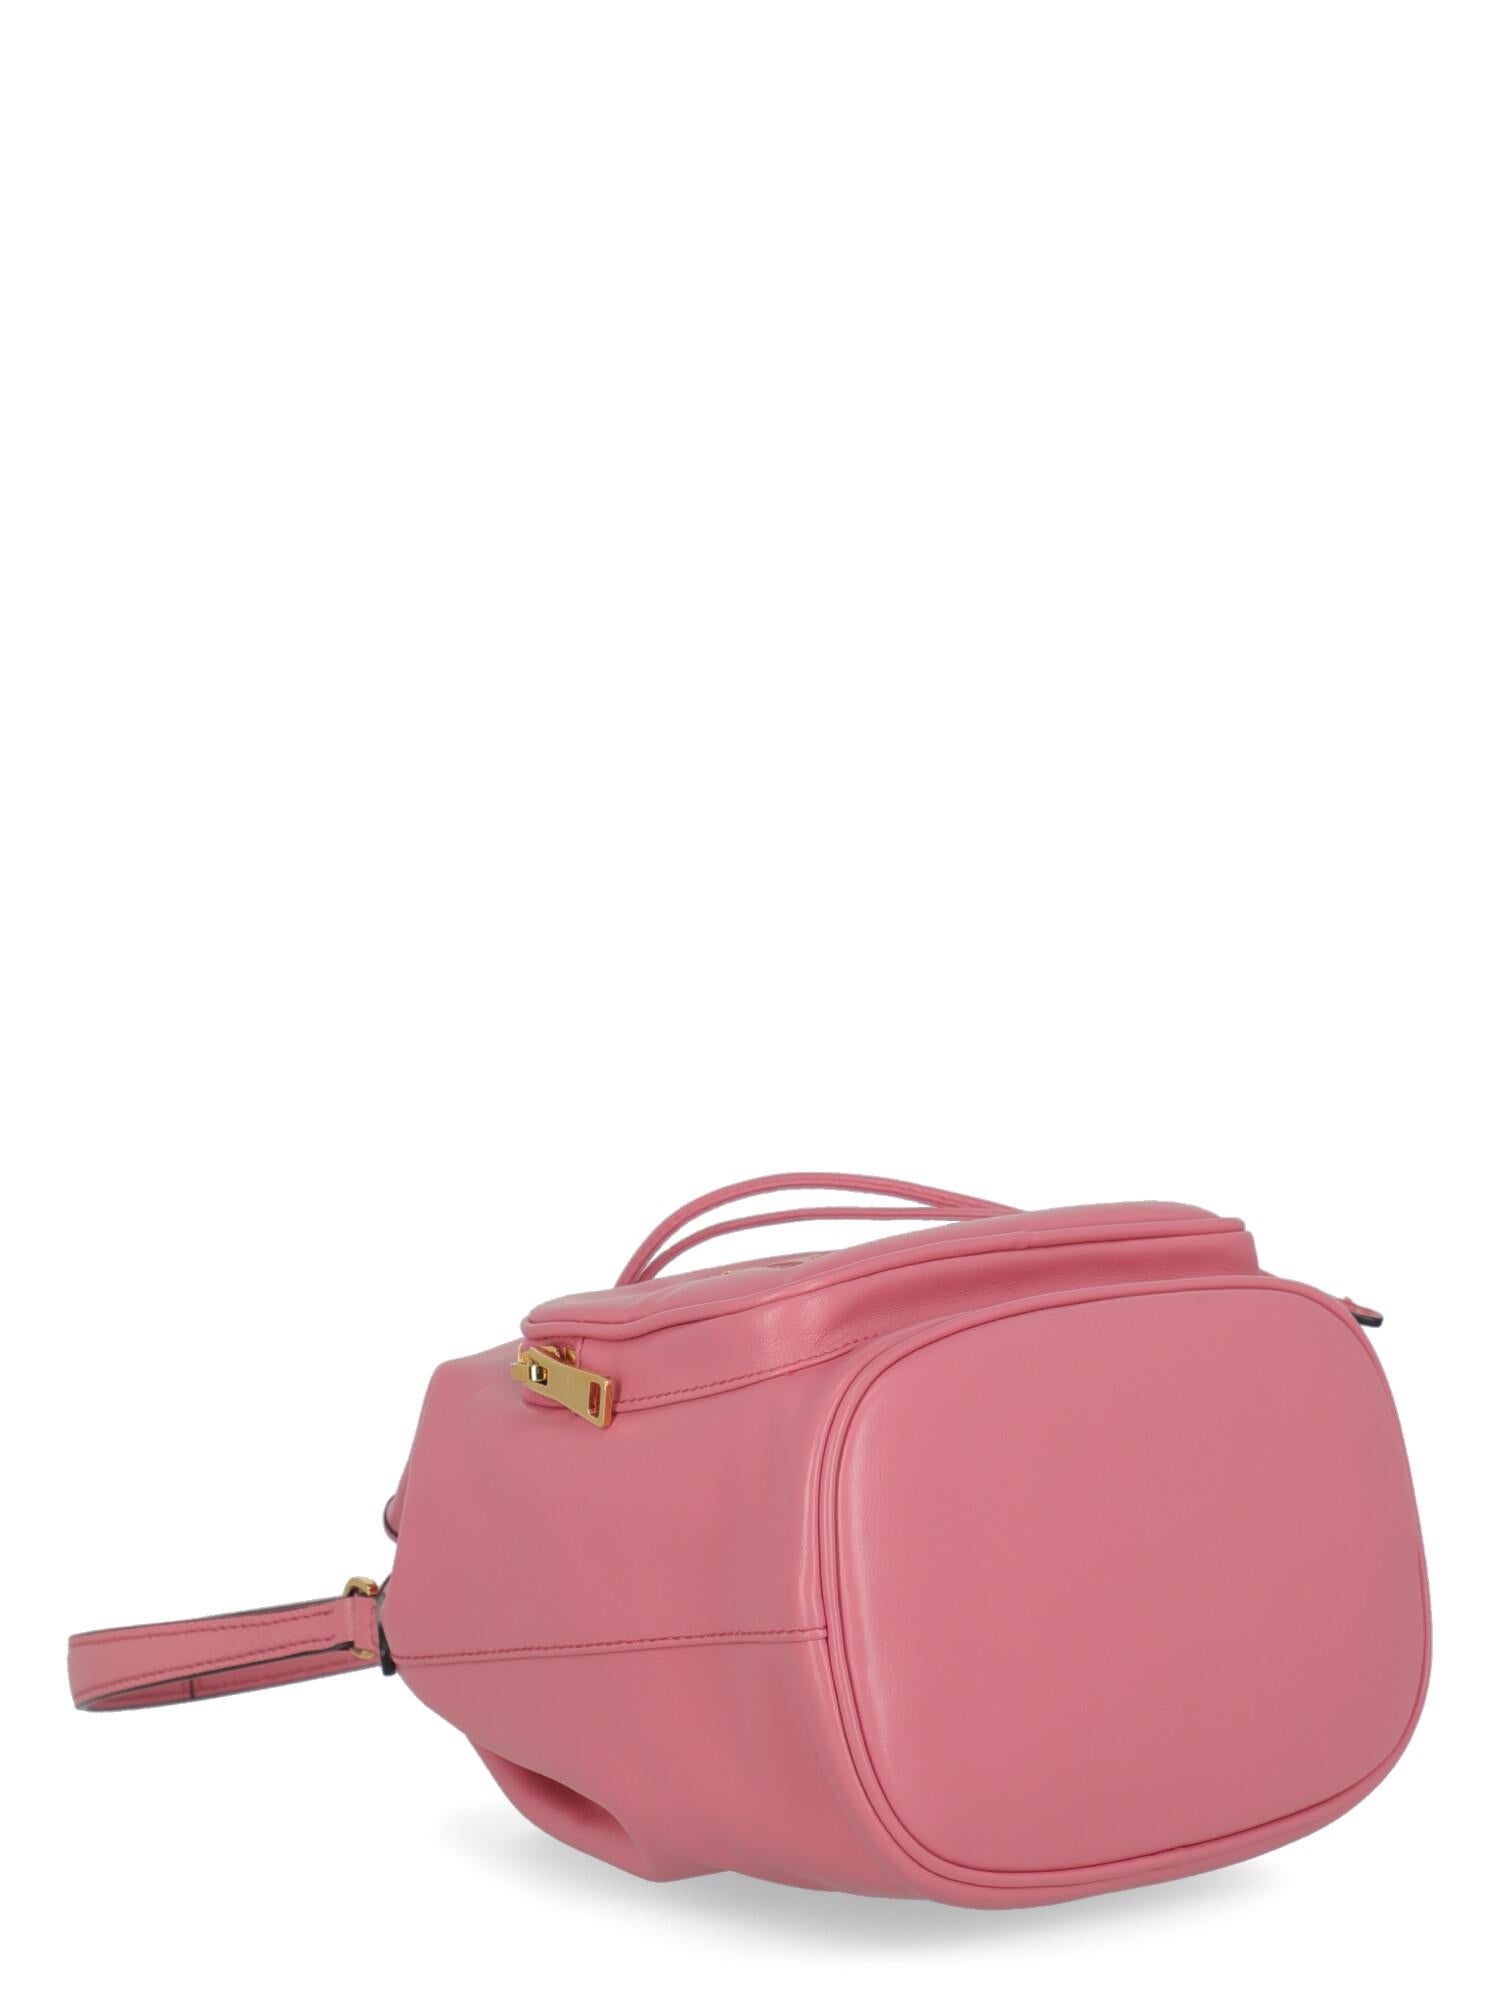 Prada Women  Handbags Pink Leather For Sale 1